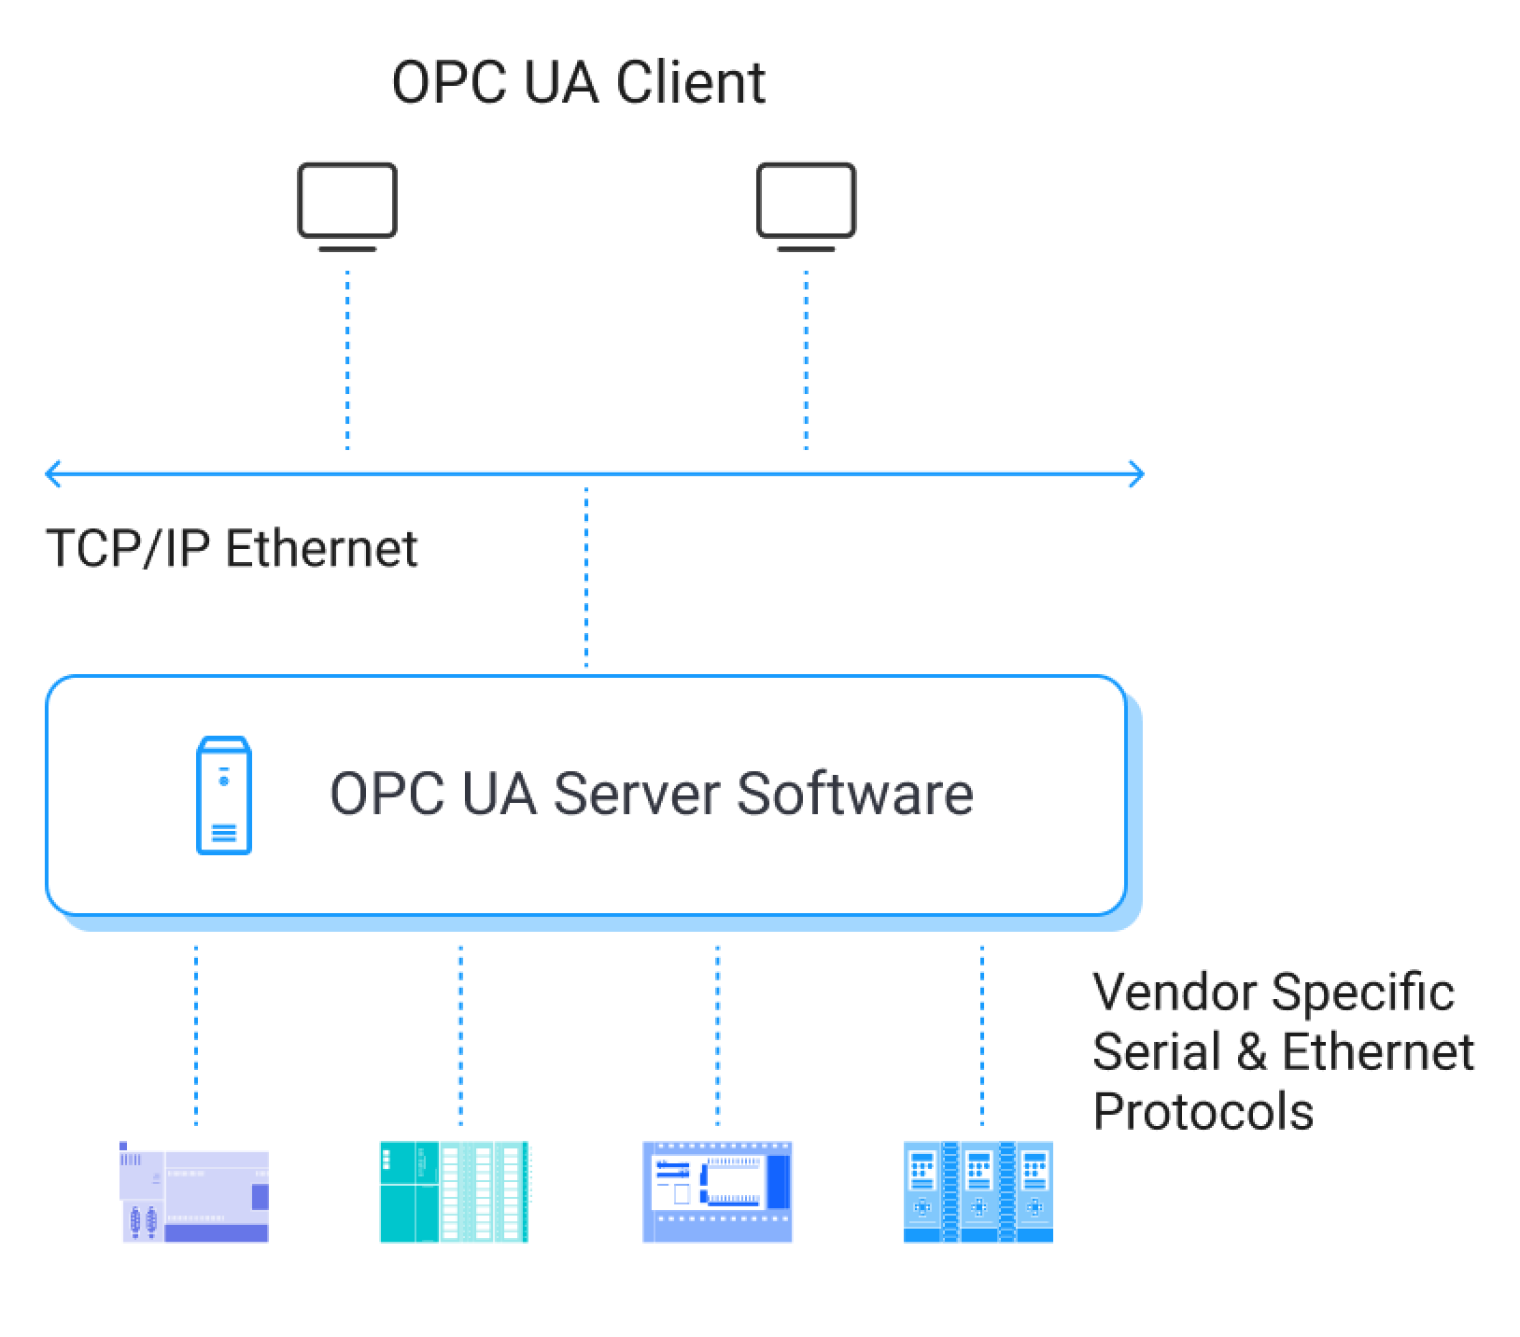 opc ua client and server